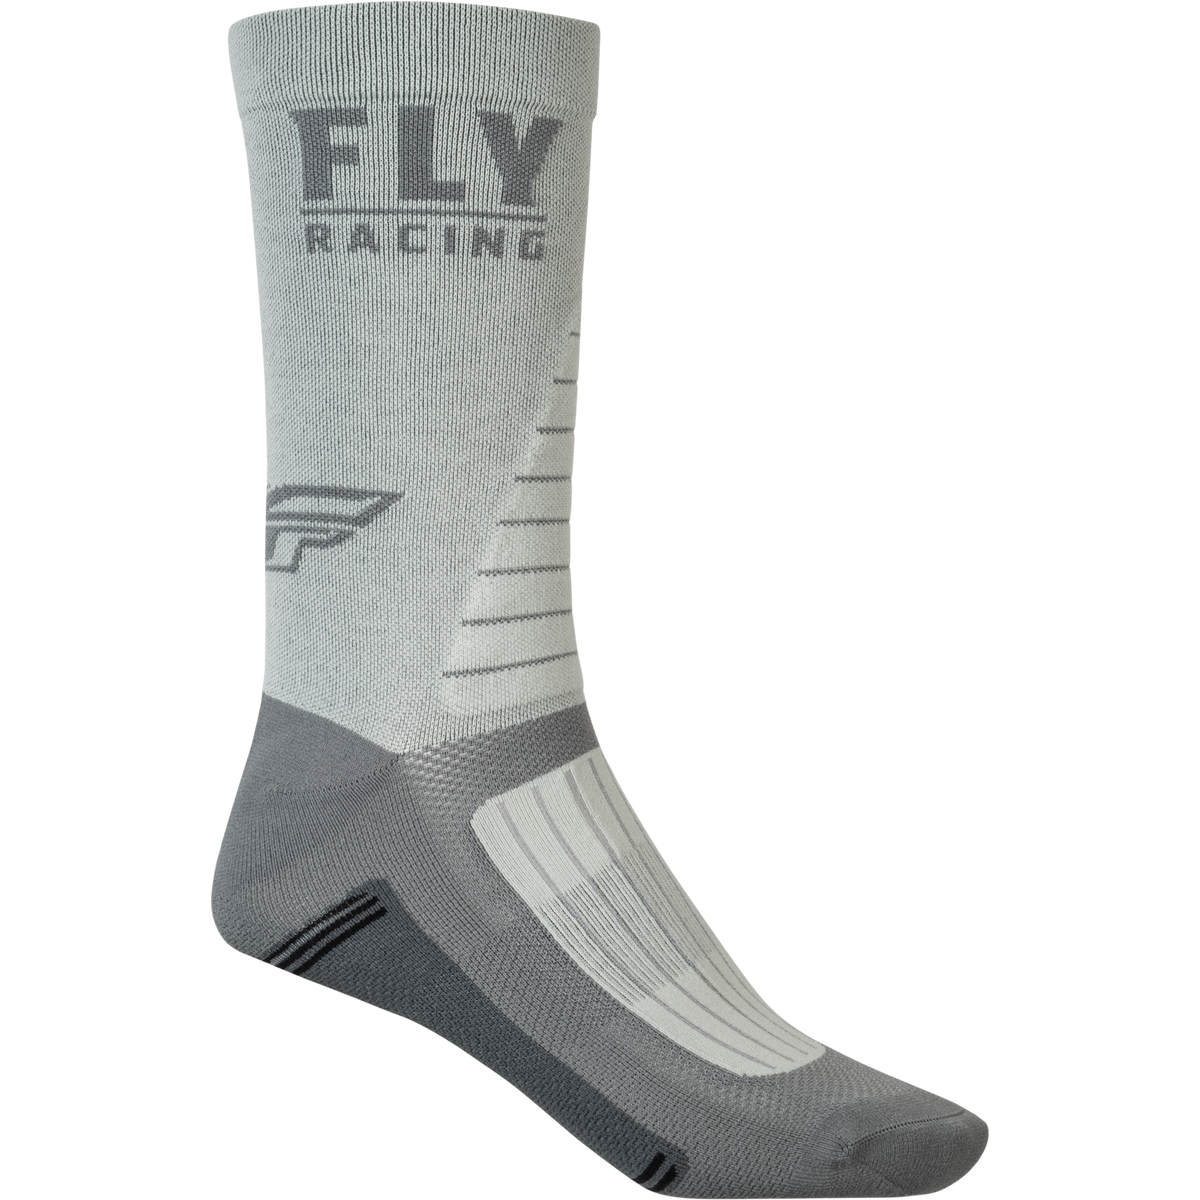 FLY Racing Factory Rider Socks